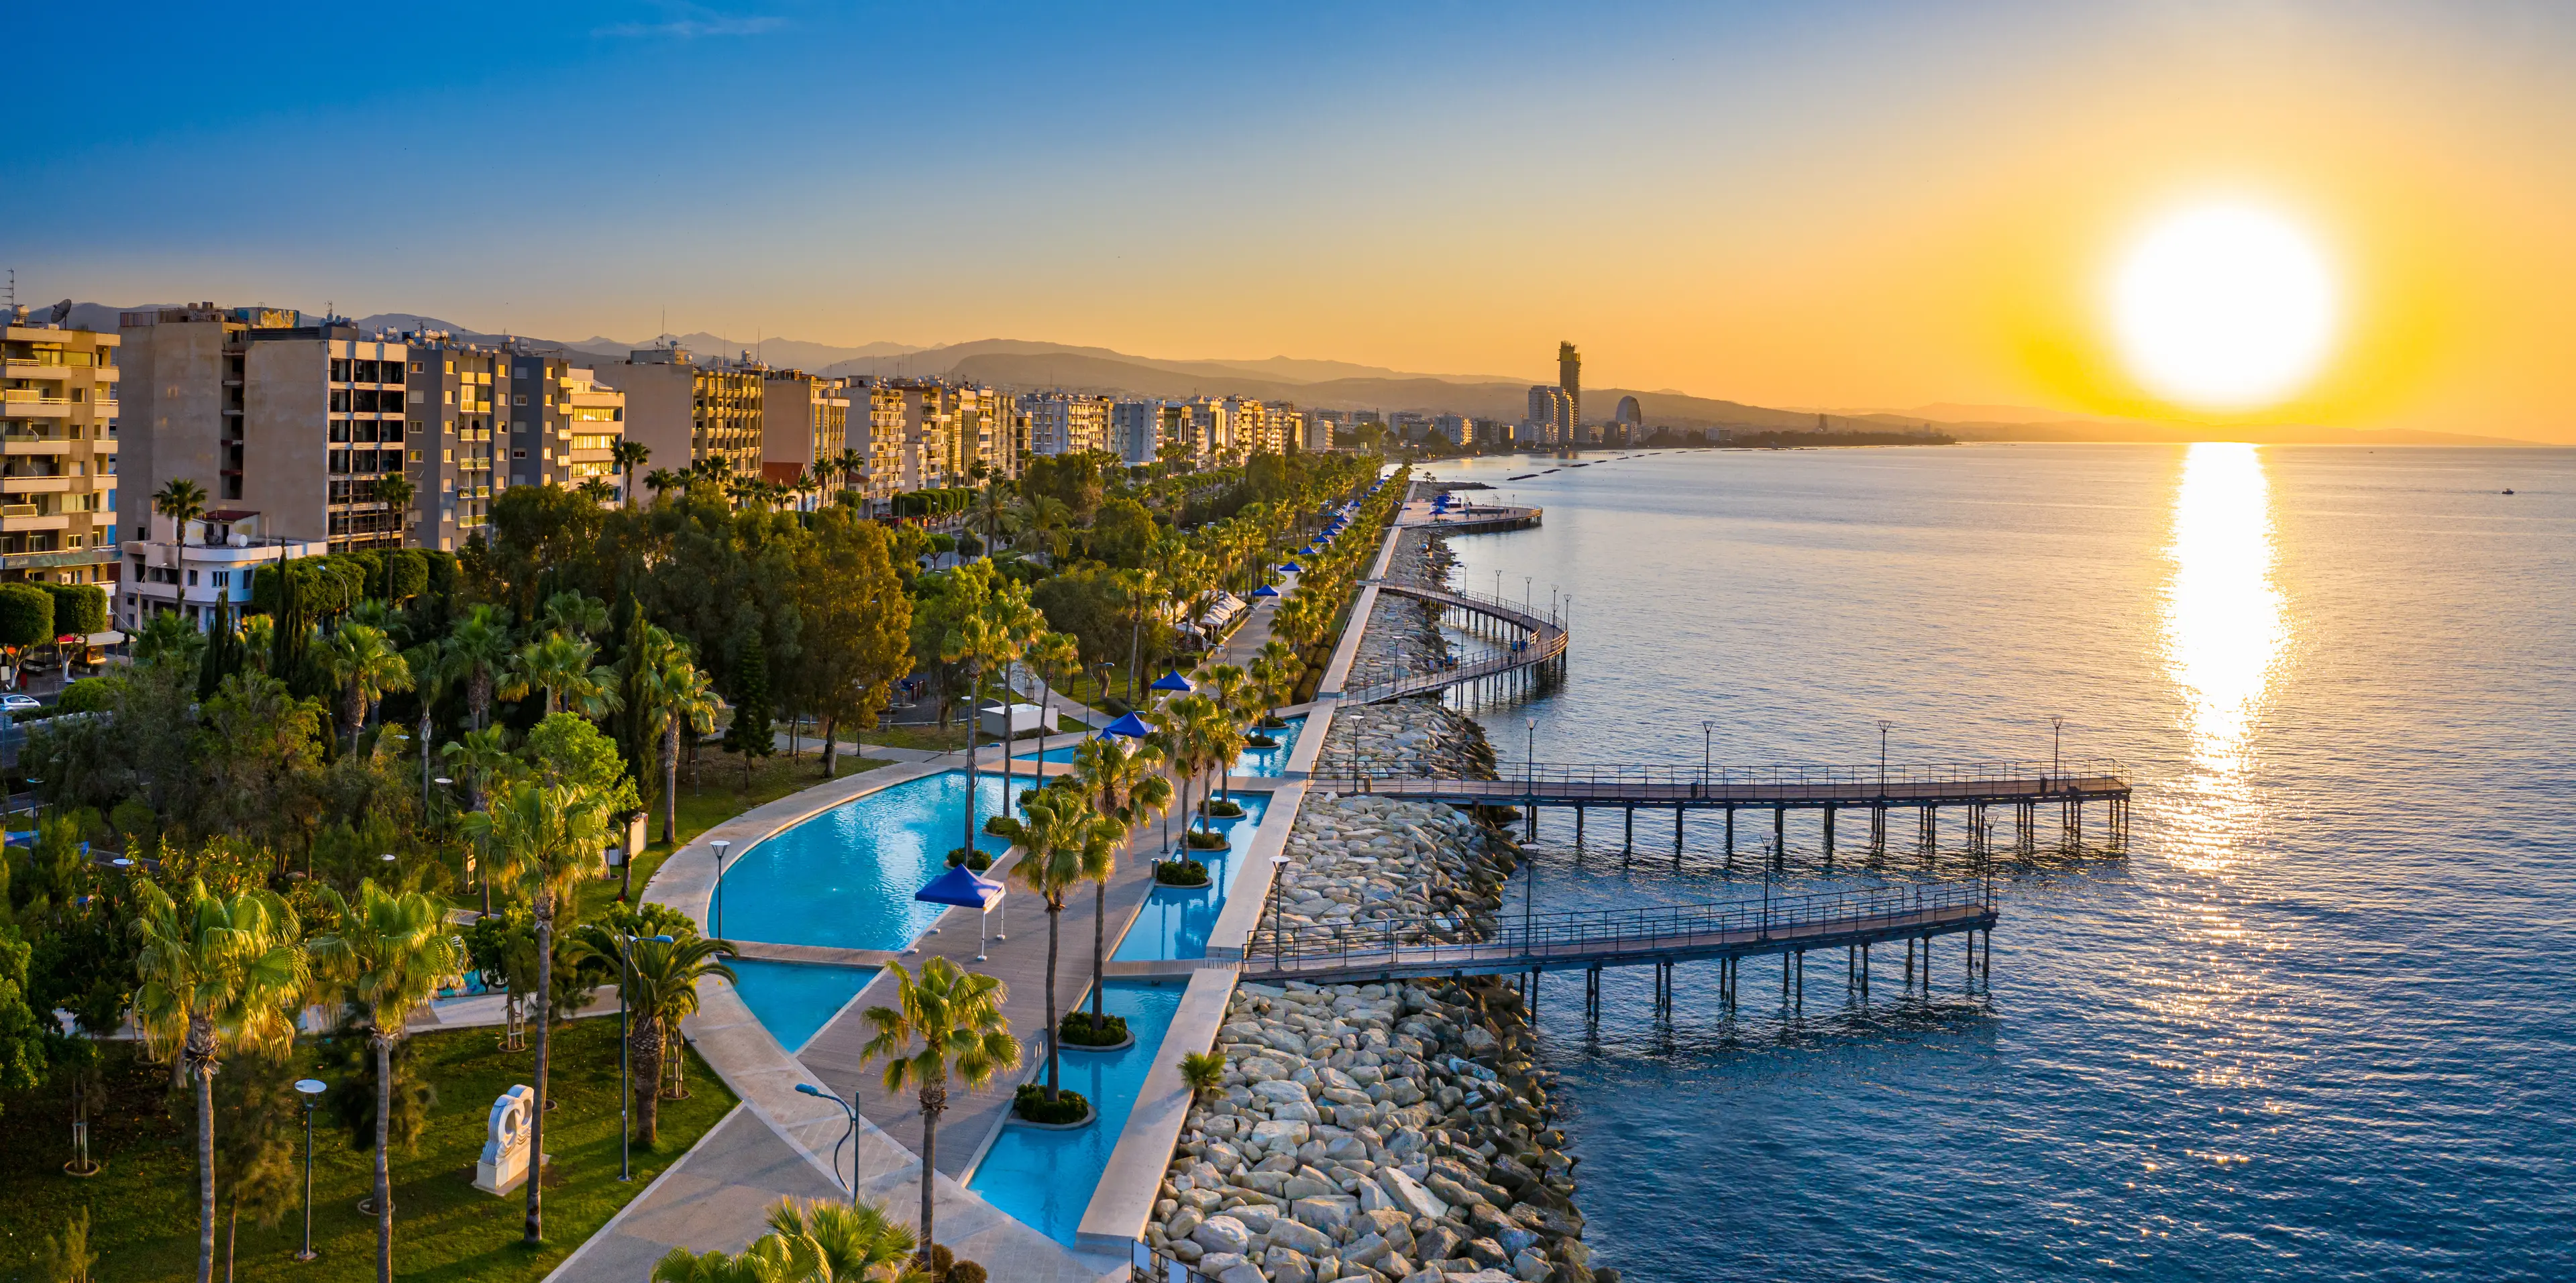 Limassol boardwalk (Molos) at sunset